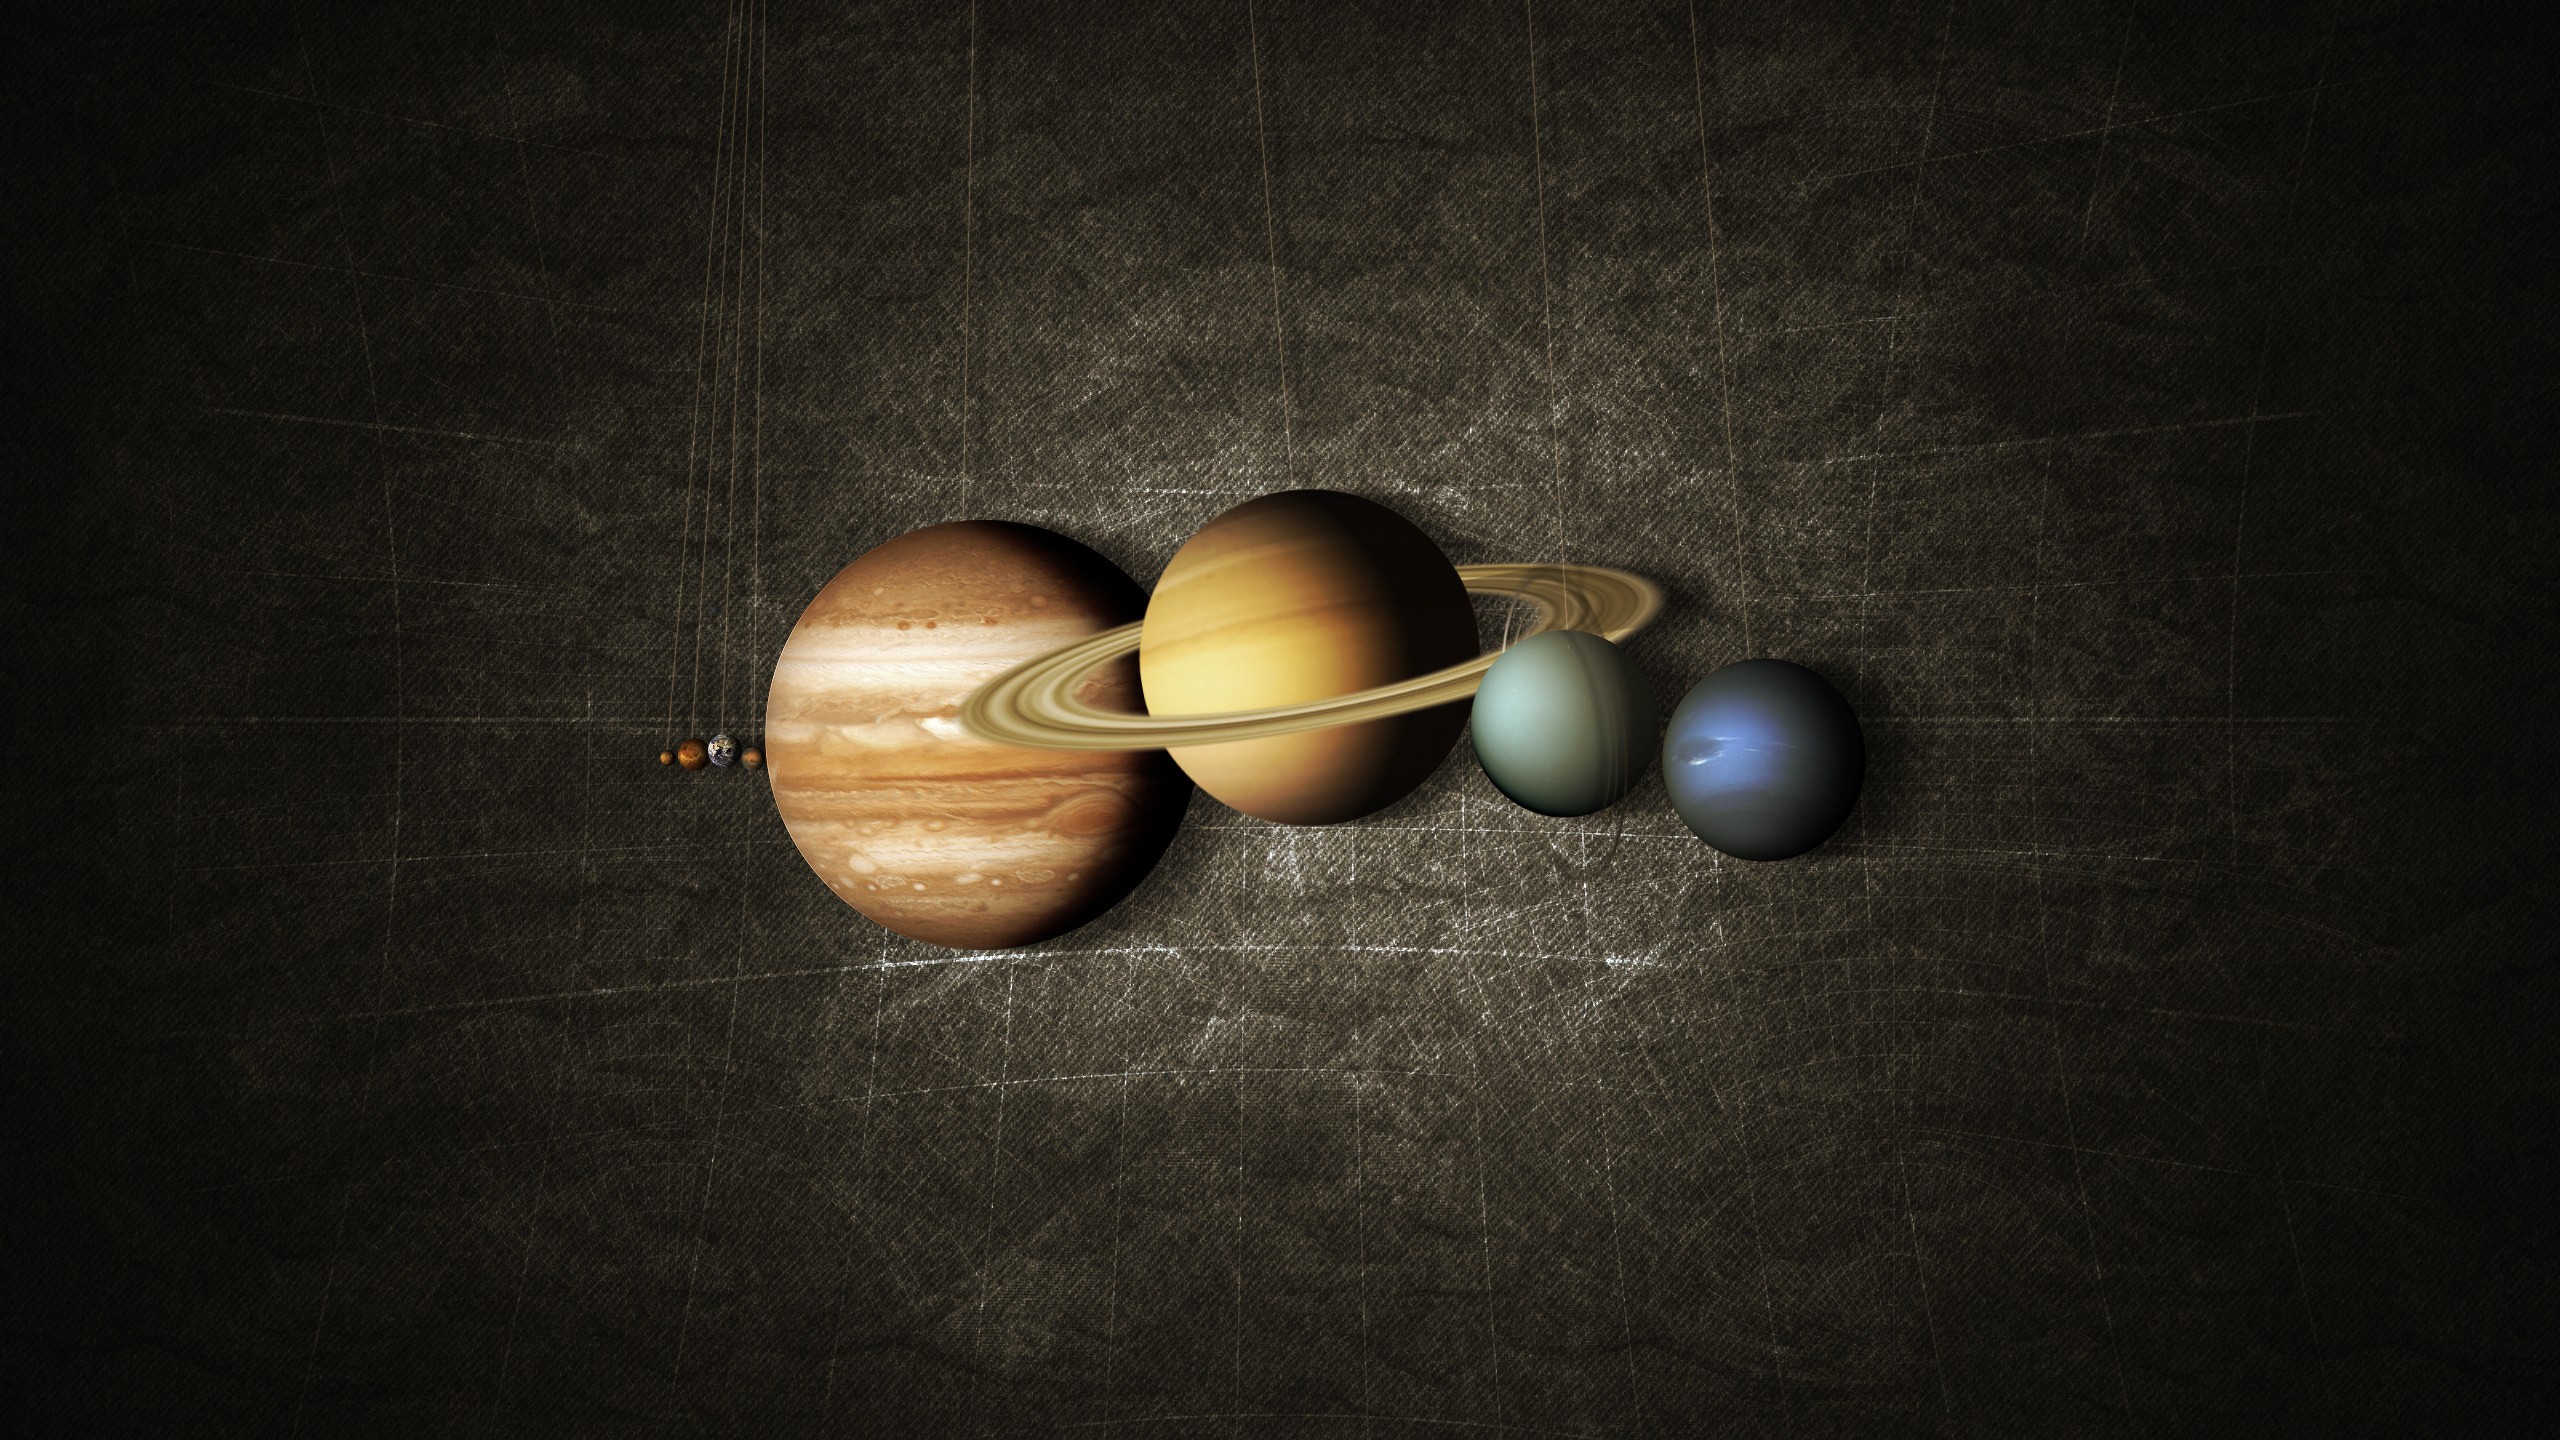 Space Universe Planet Mercury Venus Earth Mars Jupiter Saturn Uranus Neptune Digital Art Texture 2560x1440